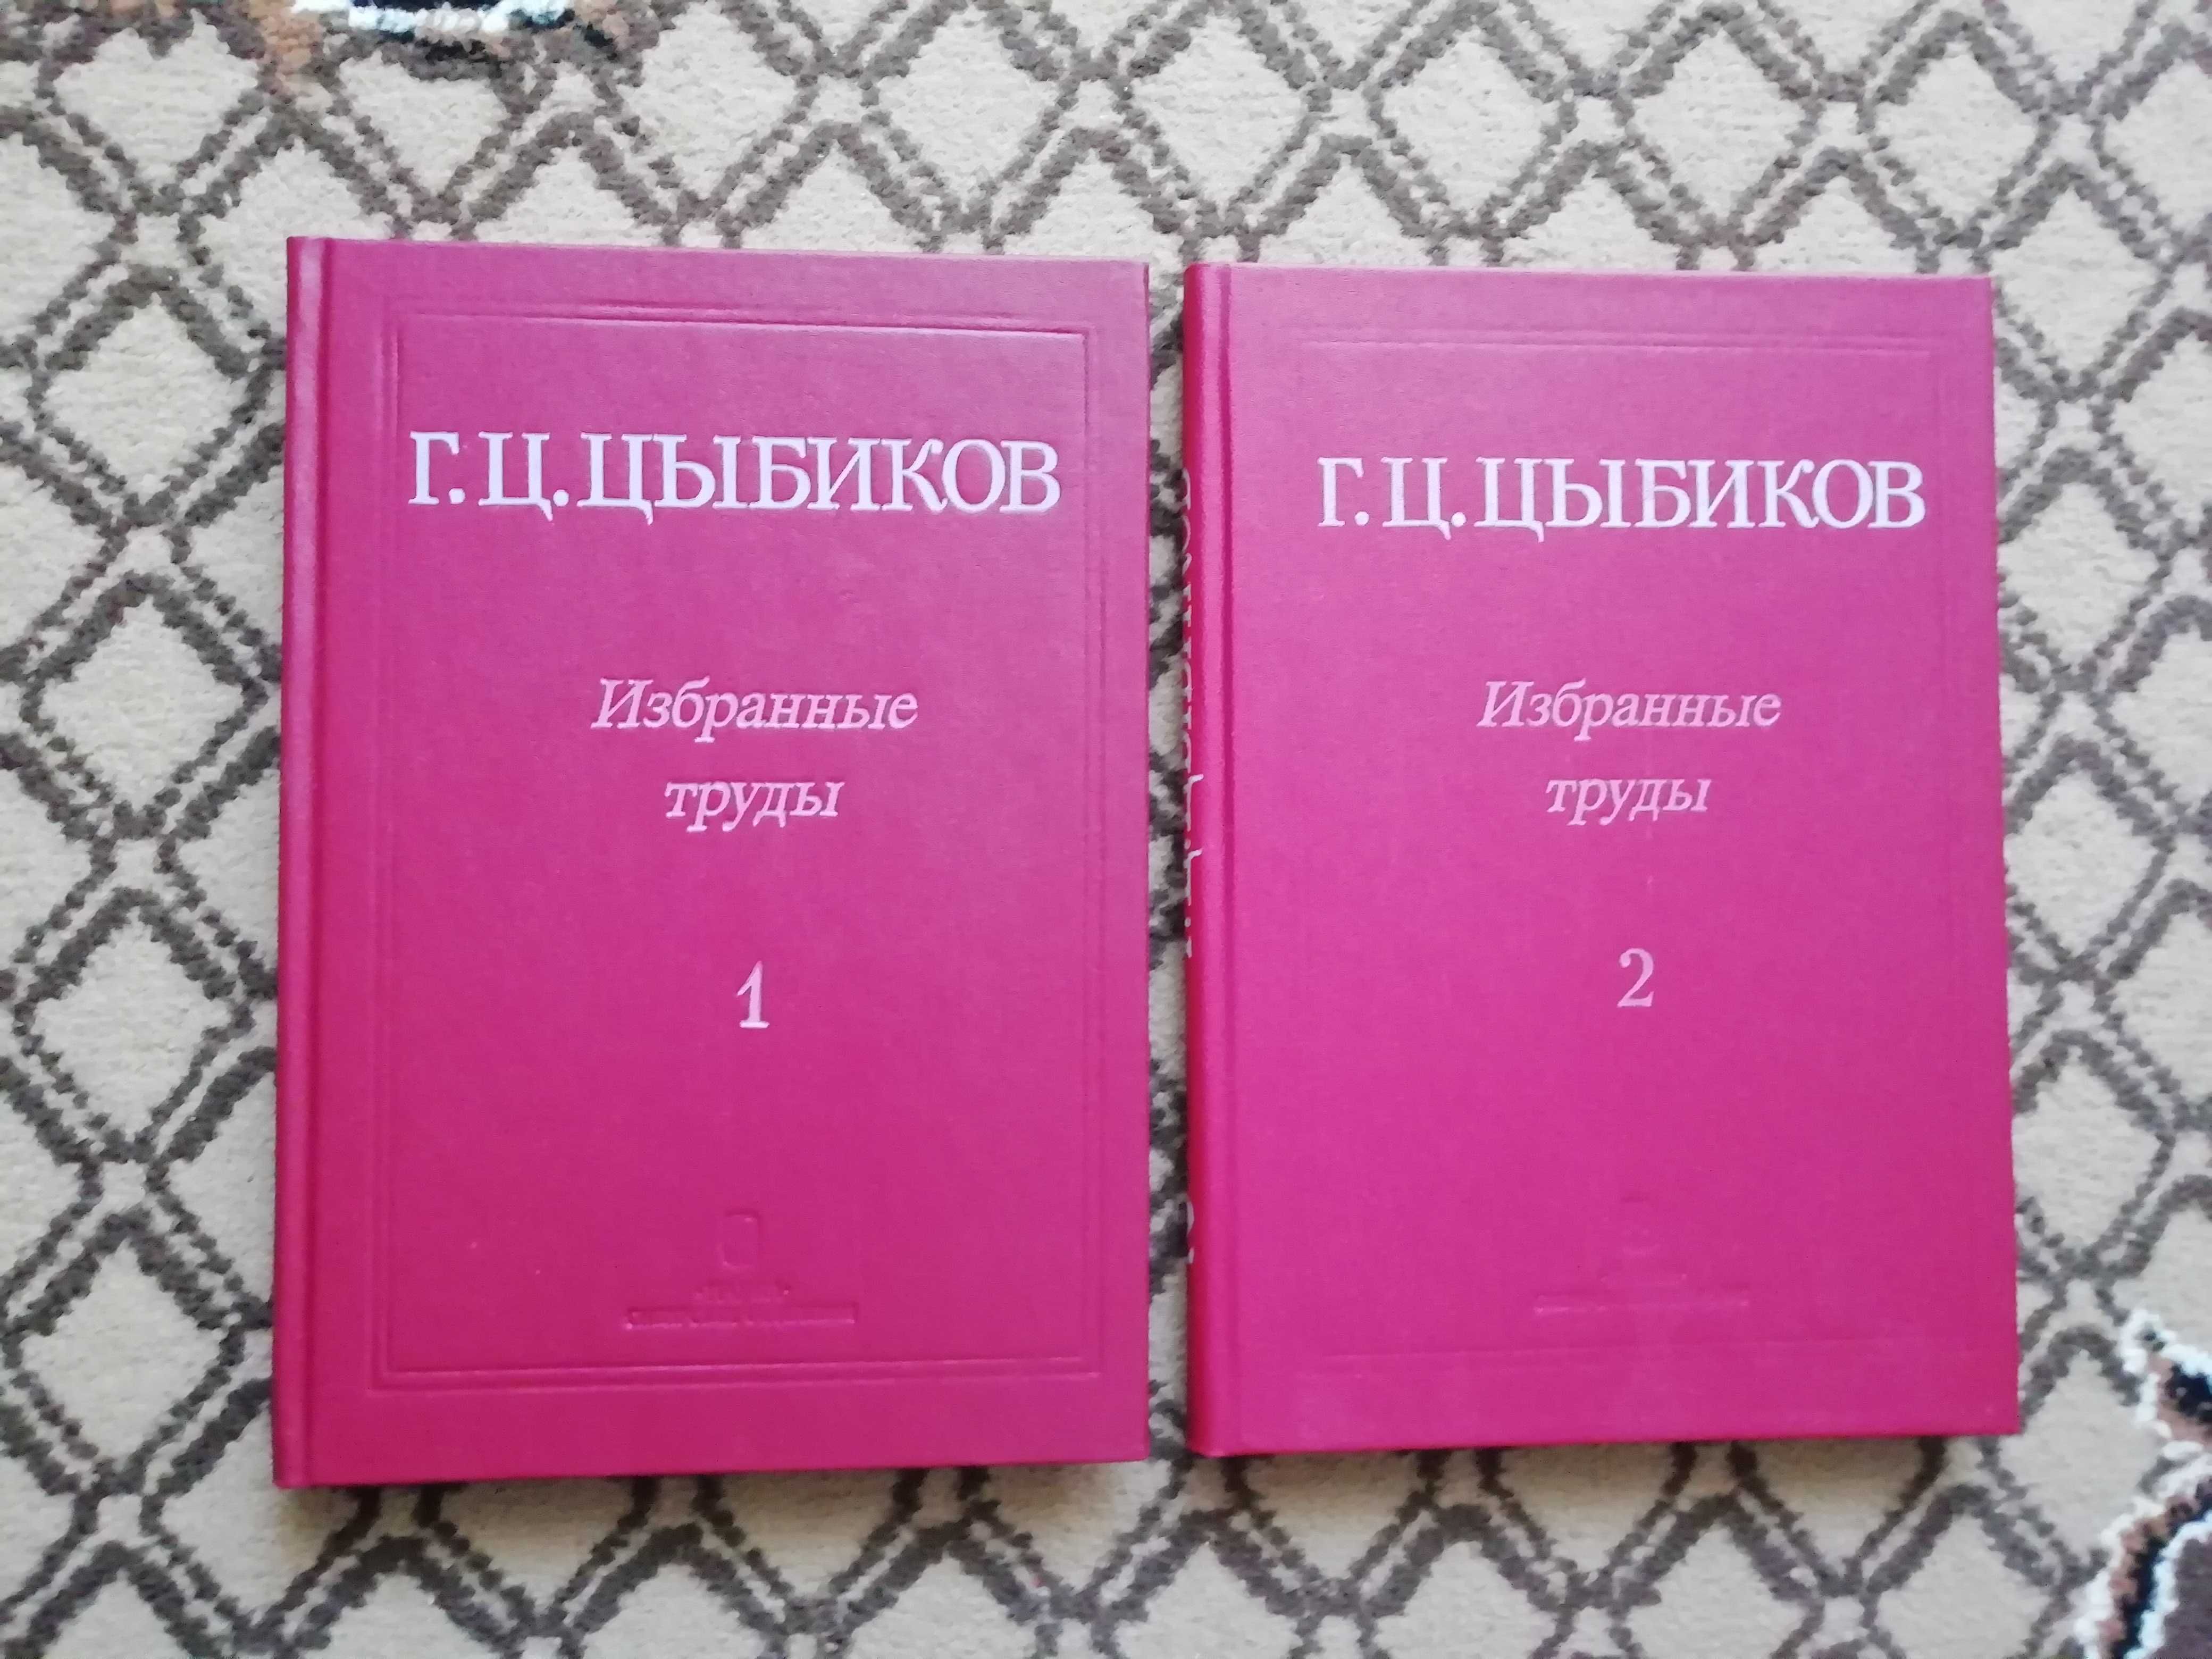 Цыбиков Г.Ц. Избранные труды в 2-х томах 1991г.